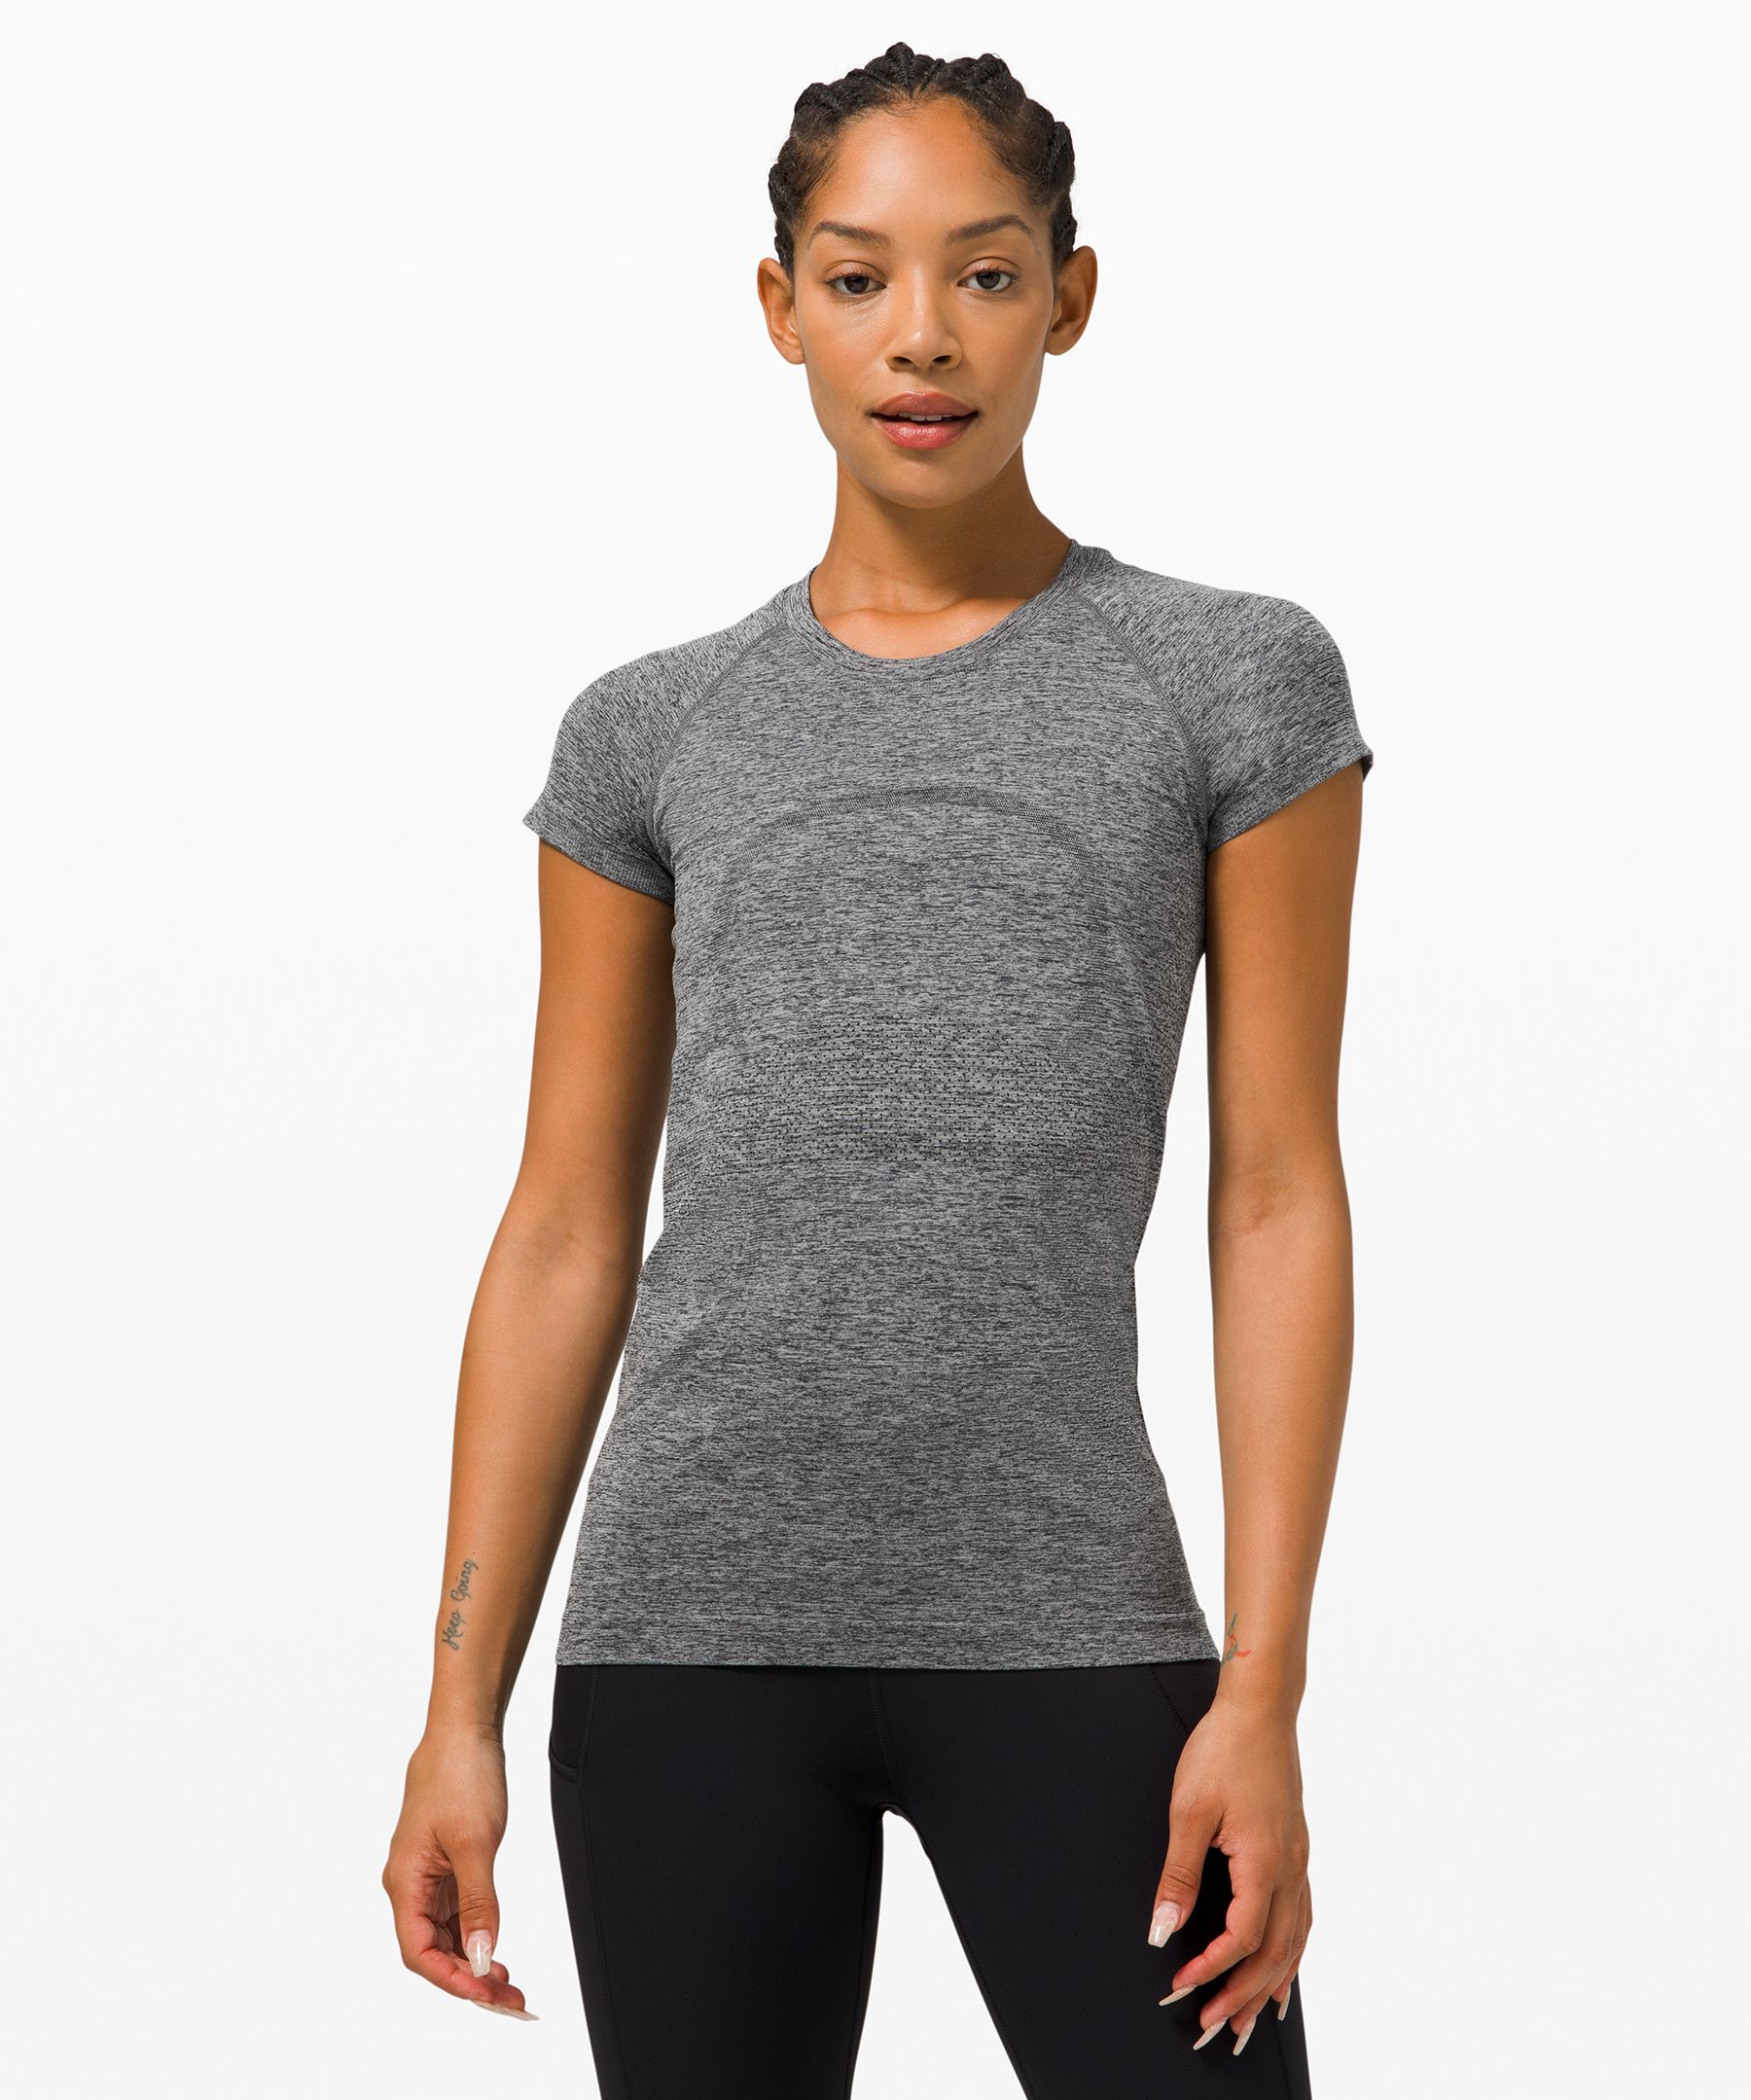 Lululemon athletica Swiftly Tech Short-Sleeve Shirt 2.0 *Race